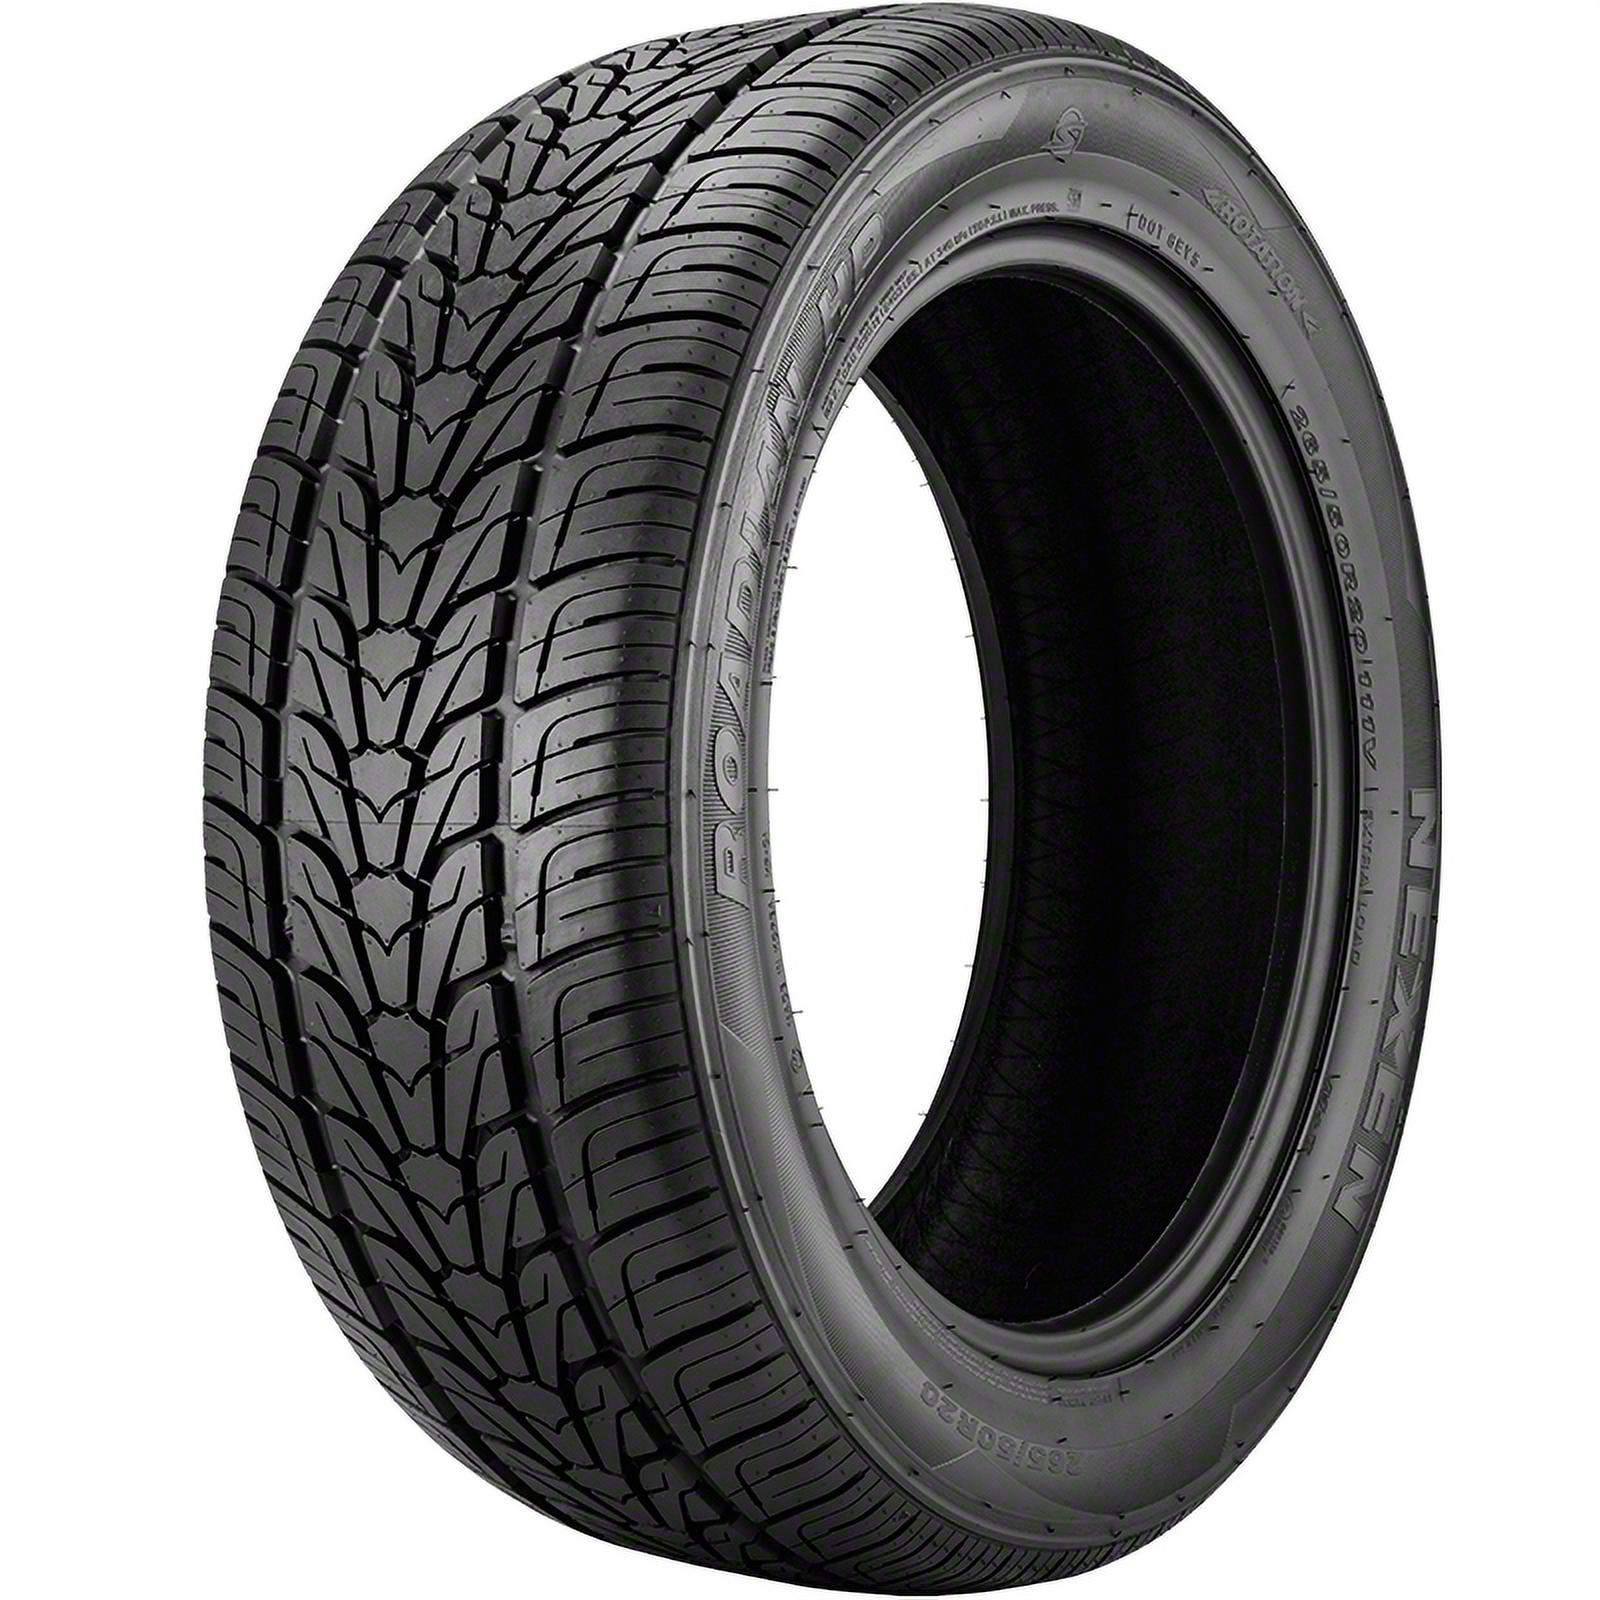 Nexen Roadian HP All-Season Performance Tire - 275/55R20 117V - image 1 of 2